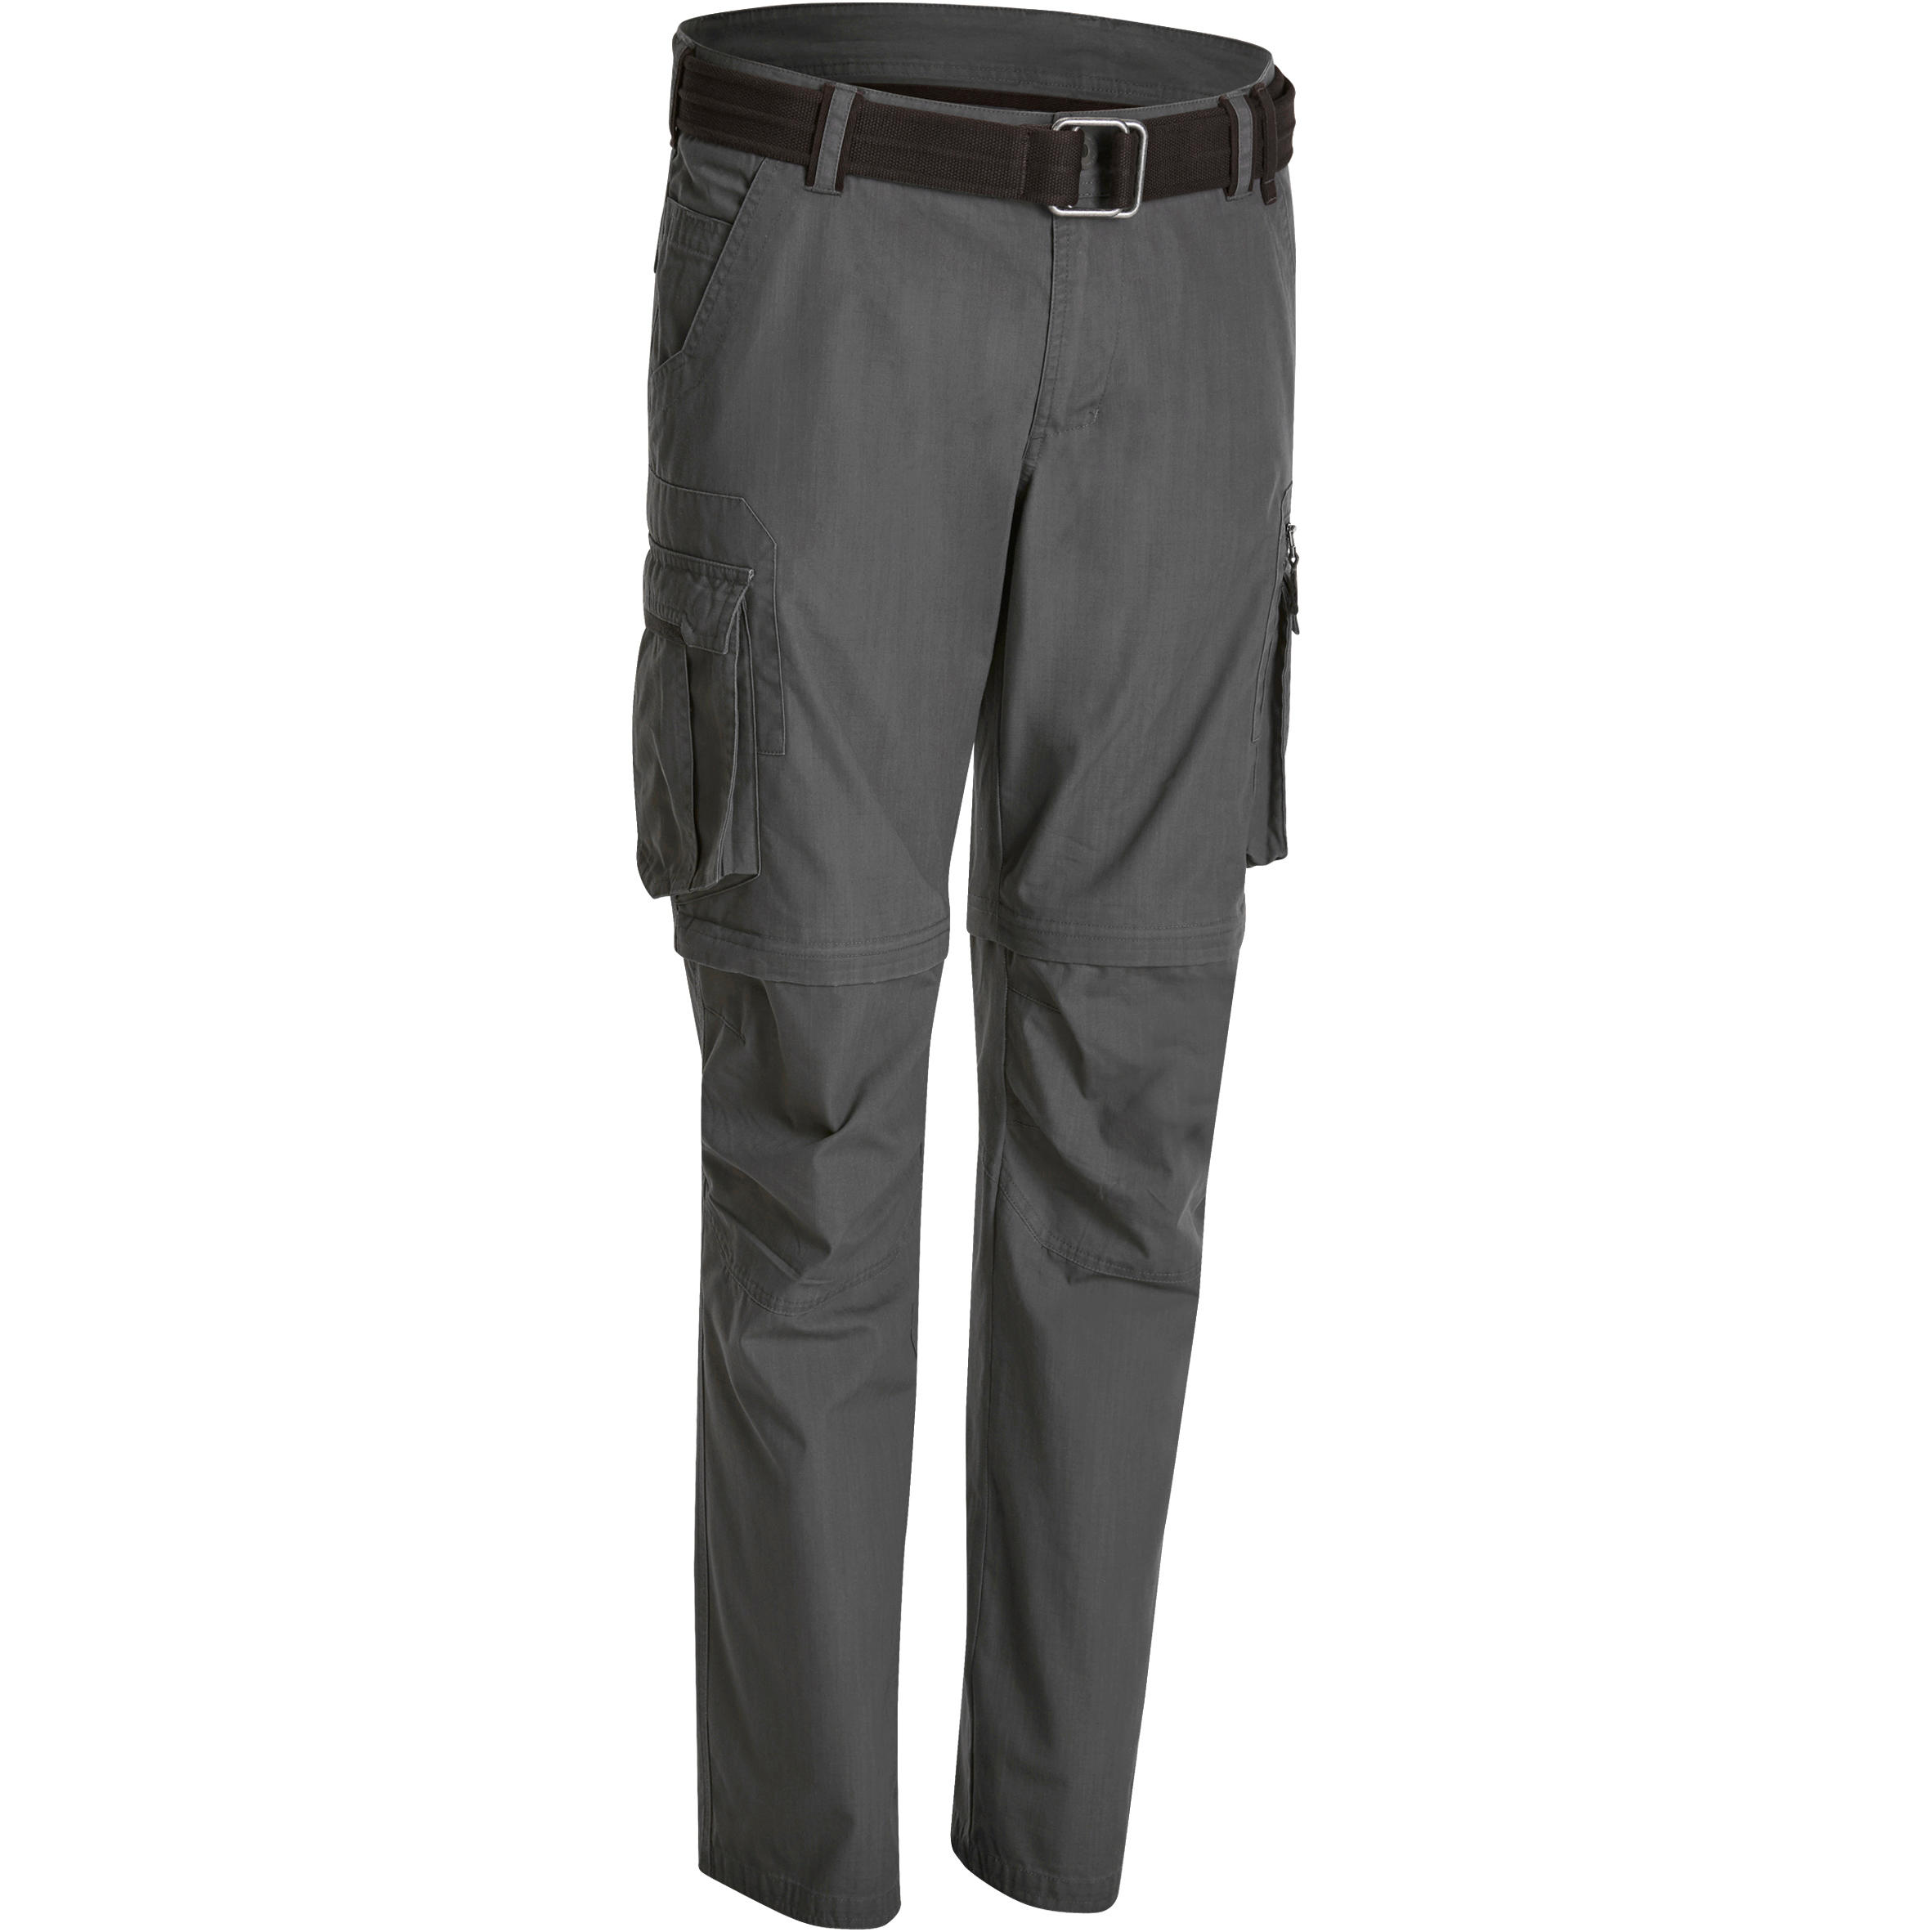 Buy UNIONBAY Mens Rainier Lightweight Comfort Travel Tech Chino Pants  Charcoal 30x30 at Amazonin